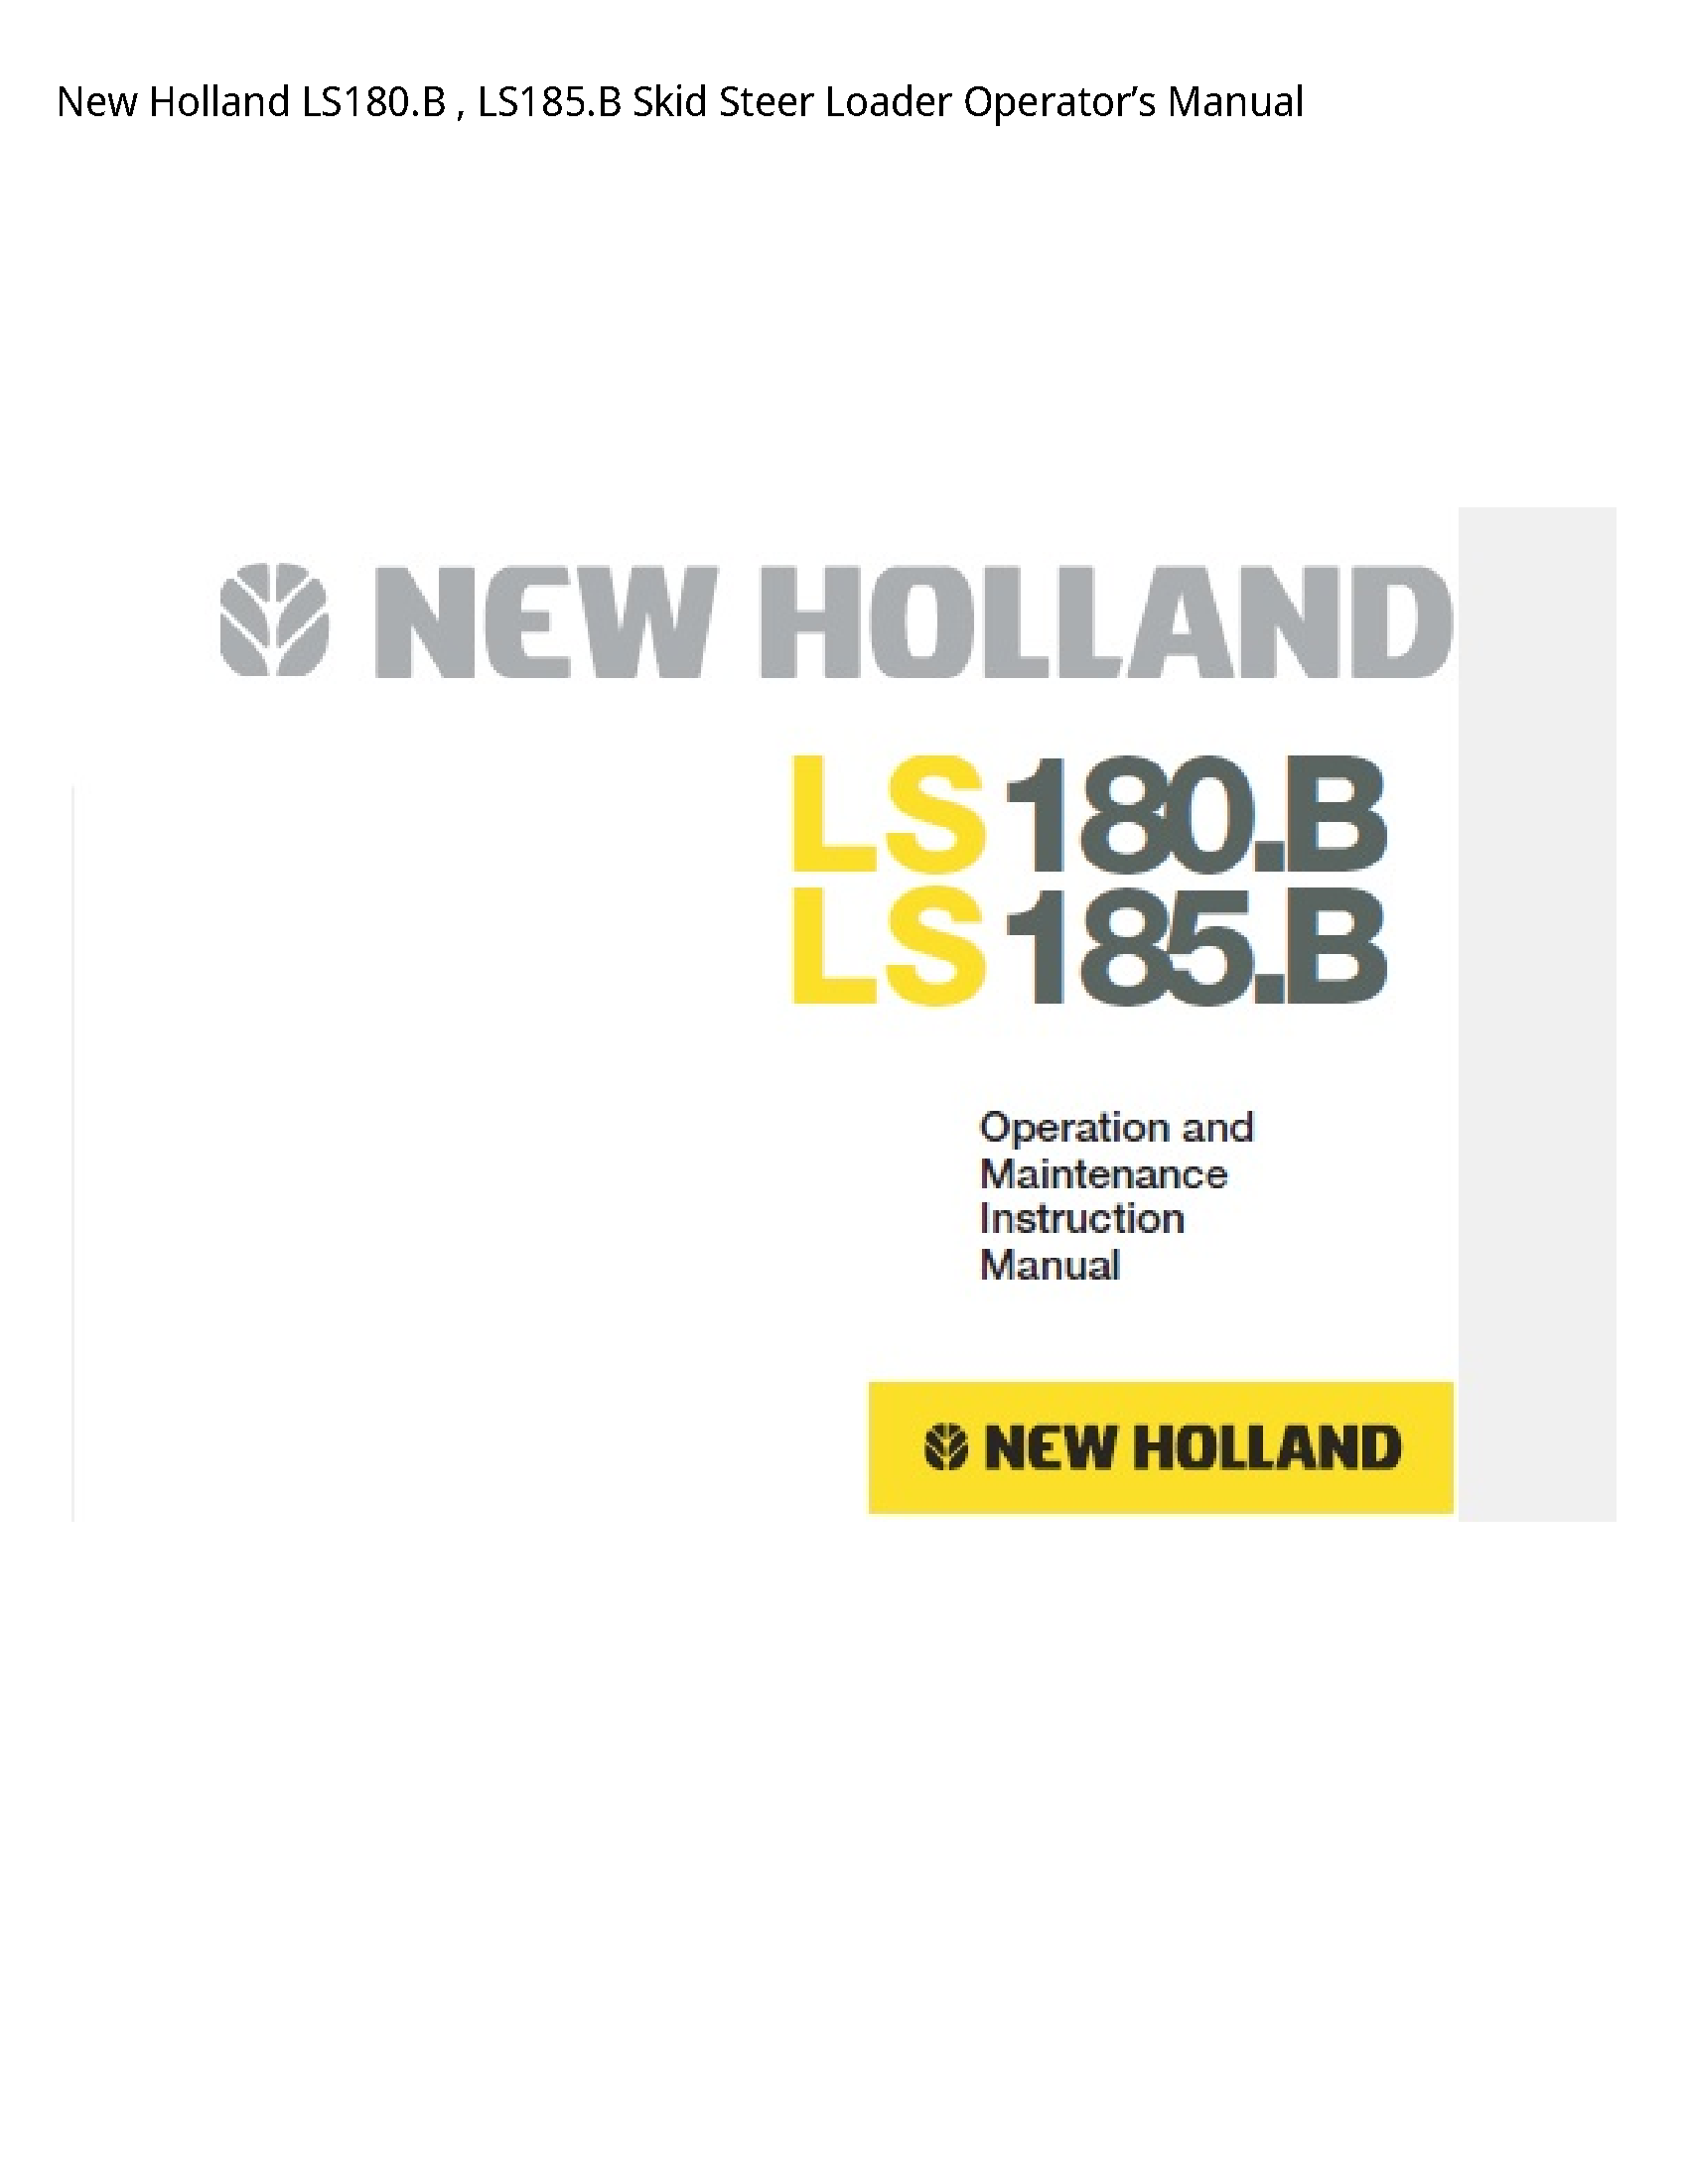 New Holland LS180.B Skid Steer Loader Operator’s manual